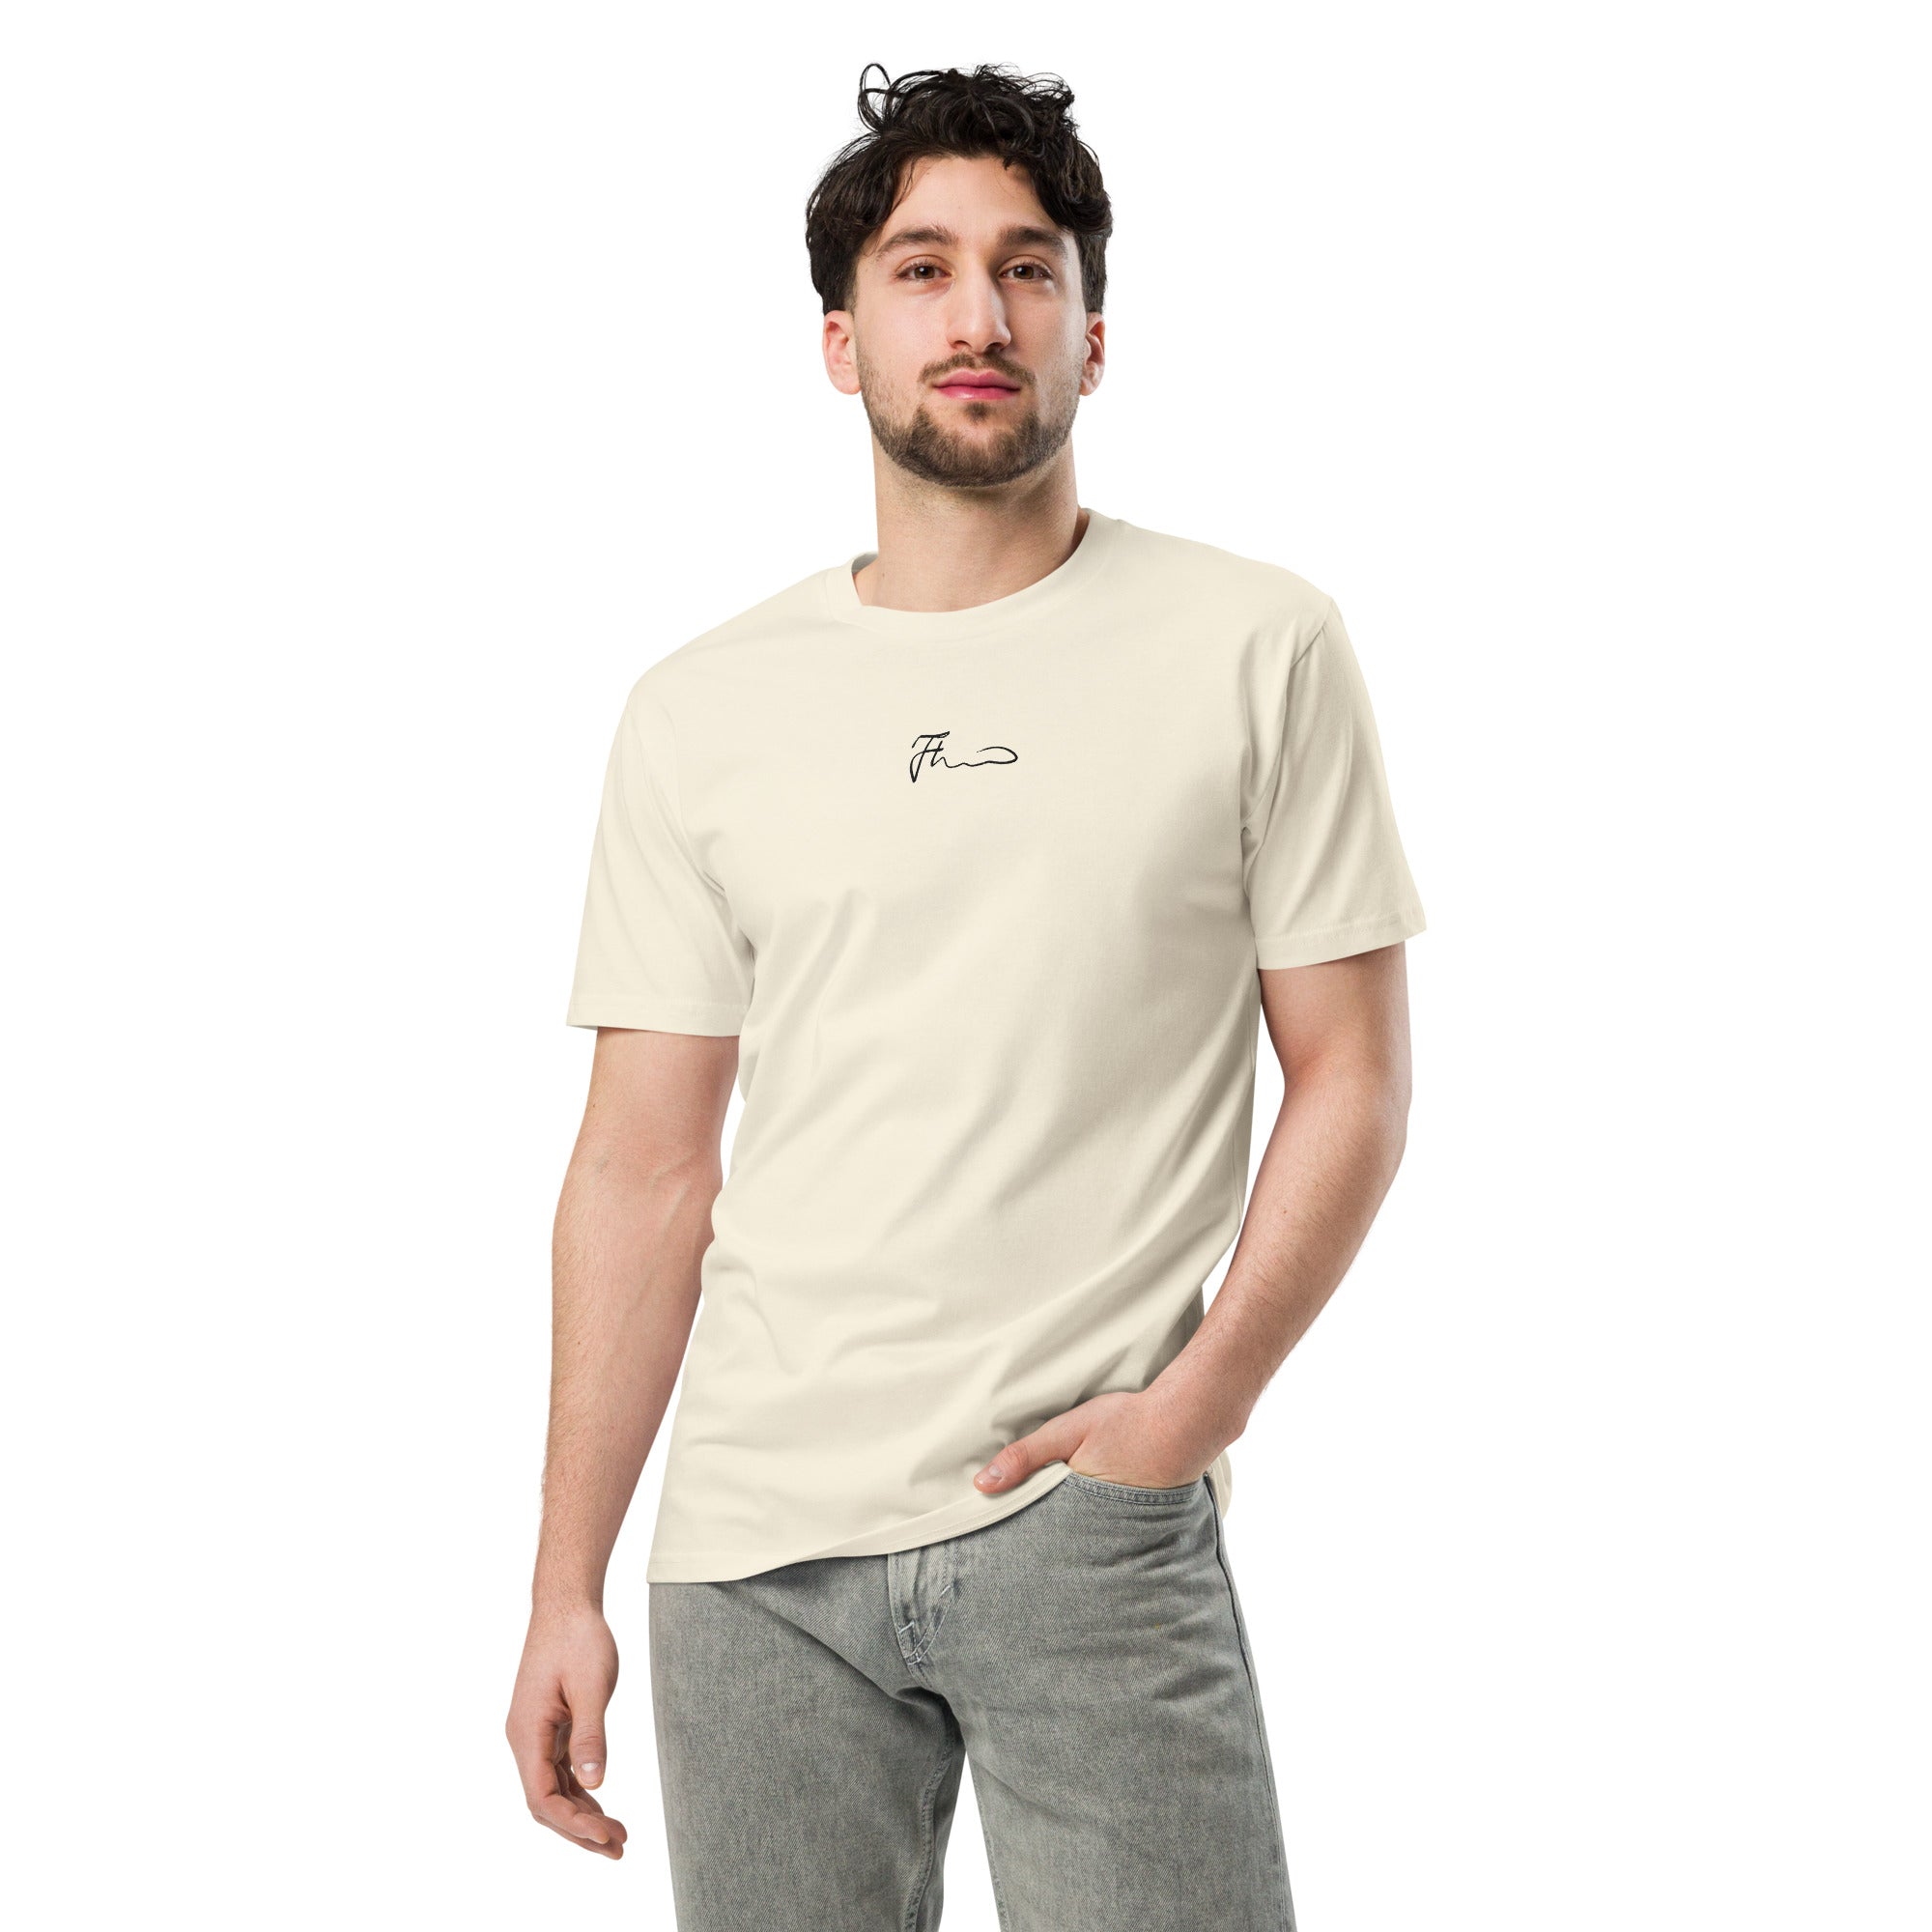 Flex-tonic basic premium t-shirt